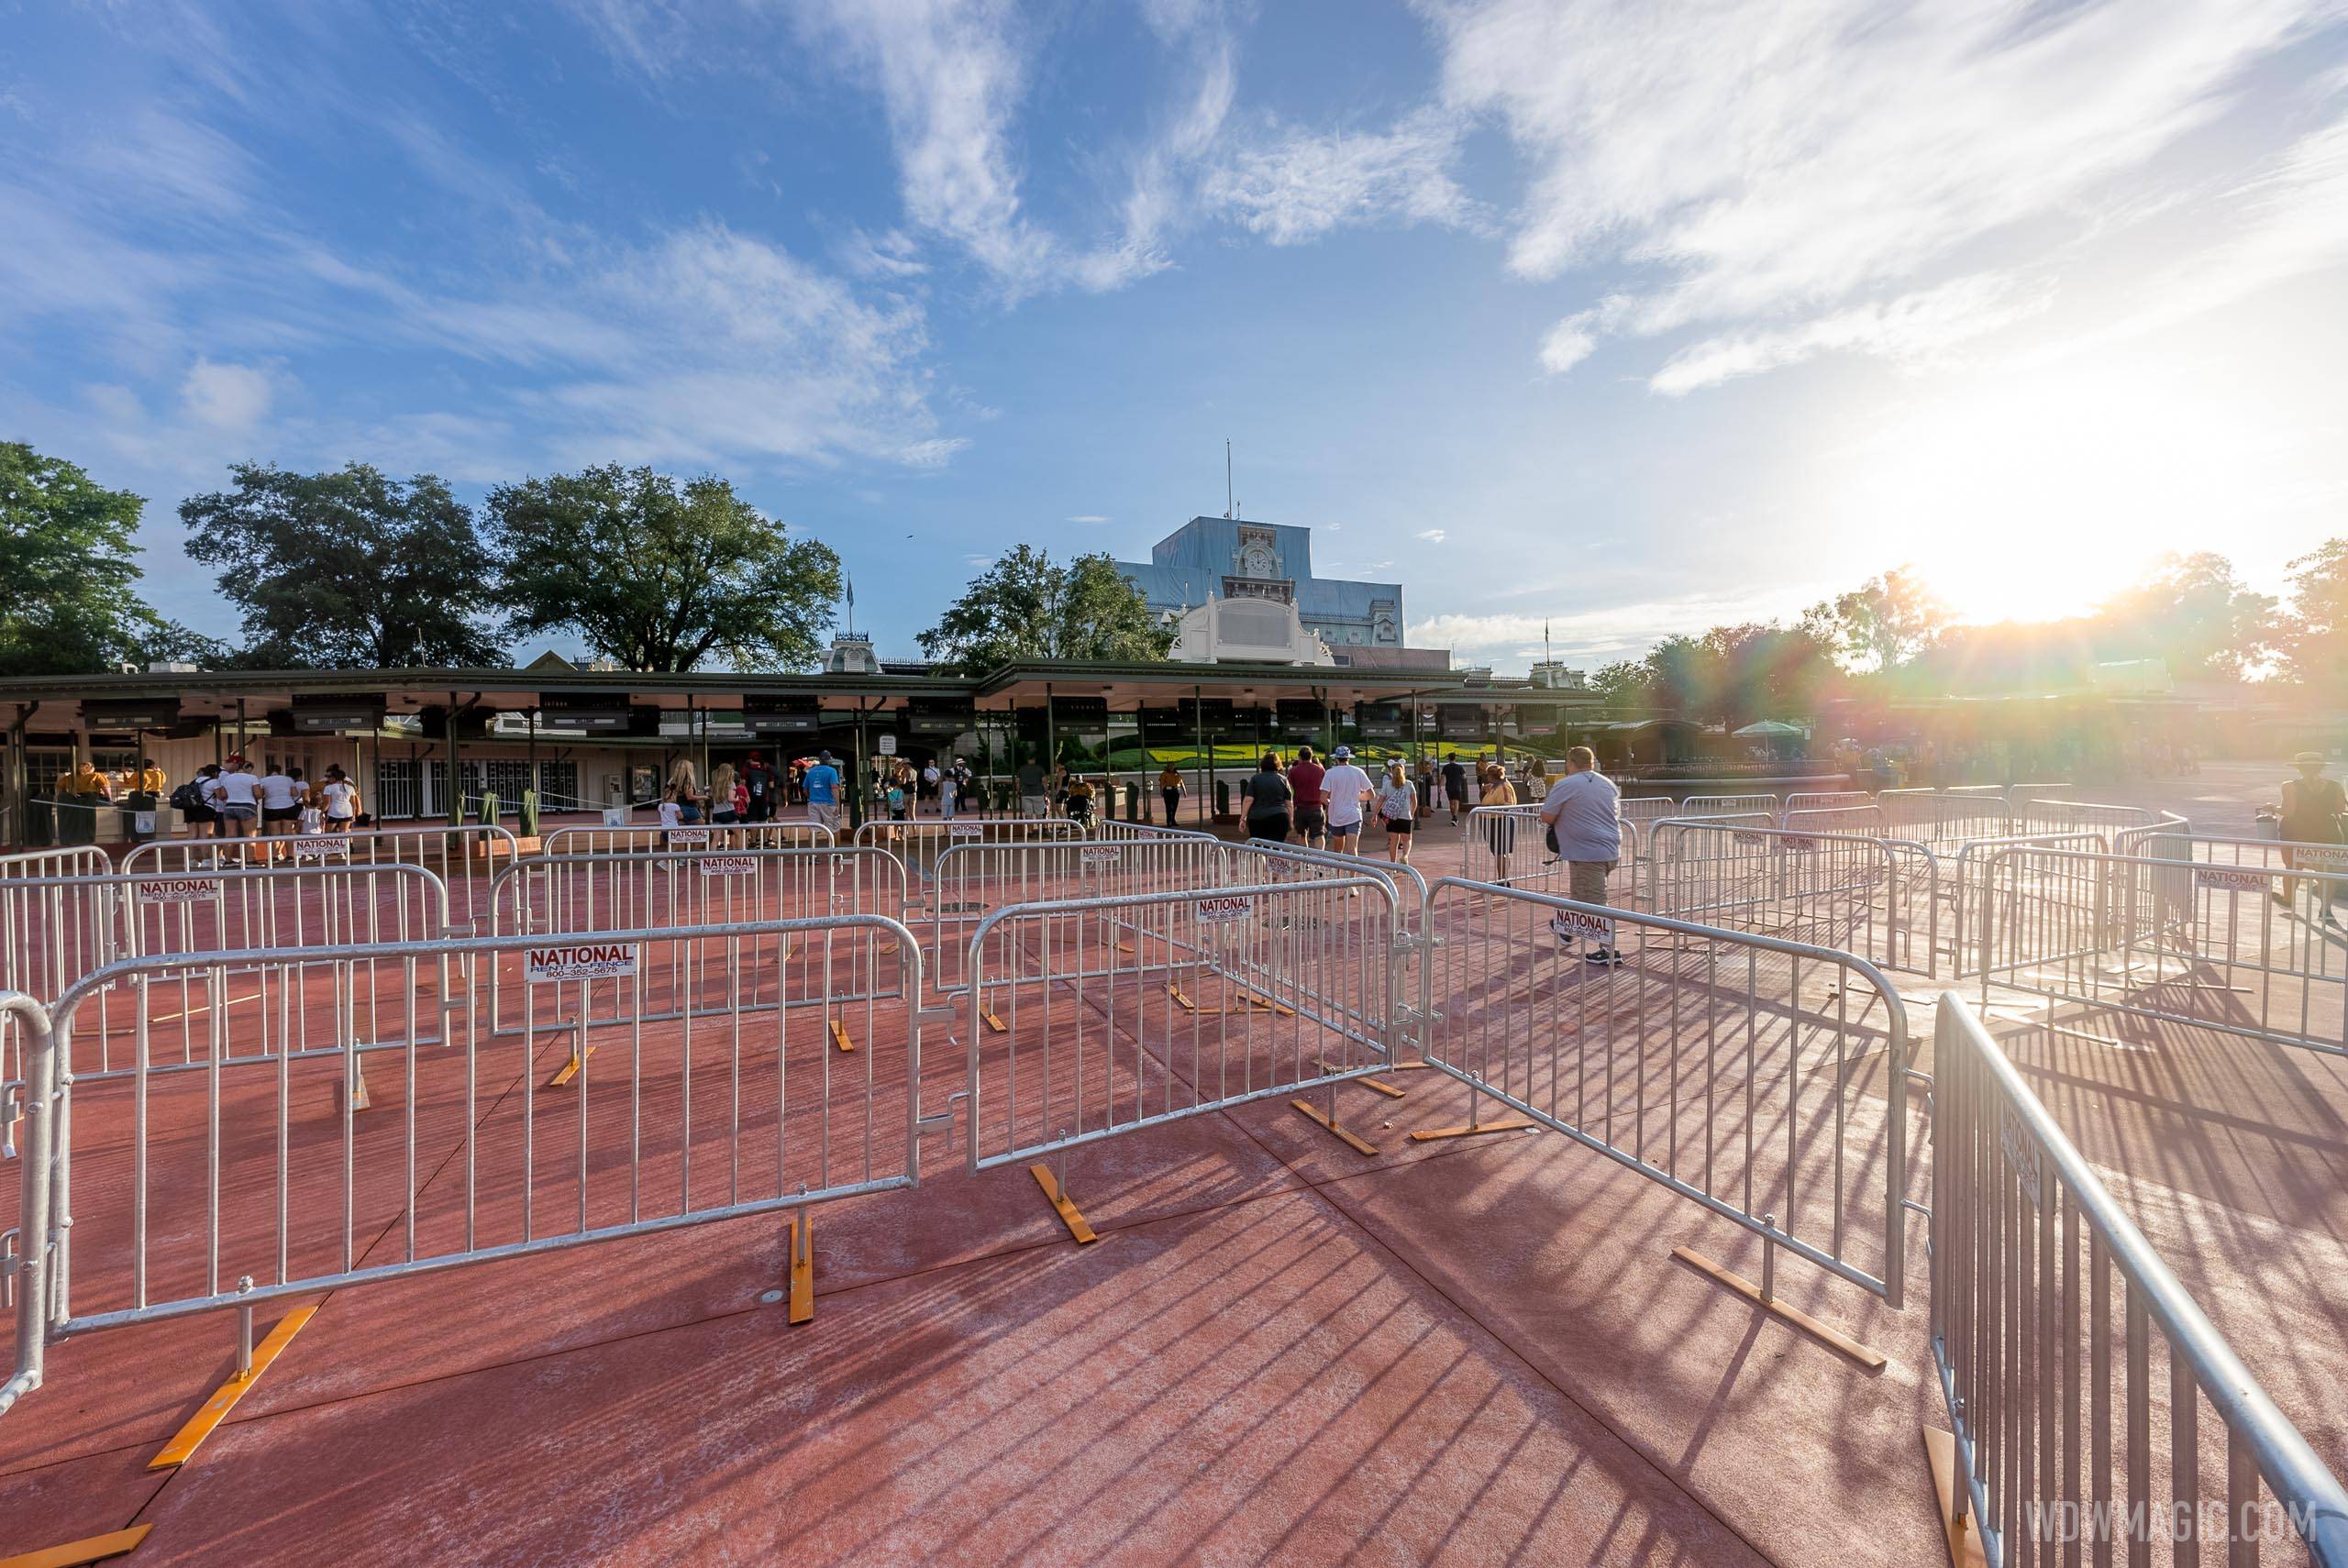 Disney adds temporary crowd control fencing at Magic Kingdom main entrance ahead of fireworks return